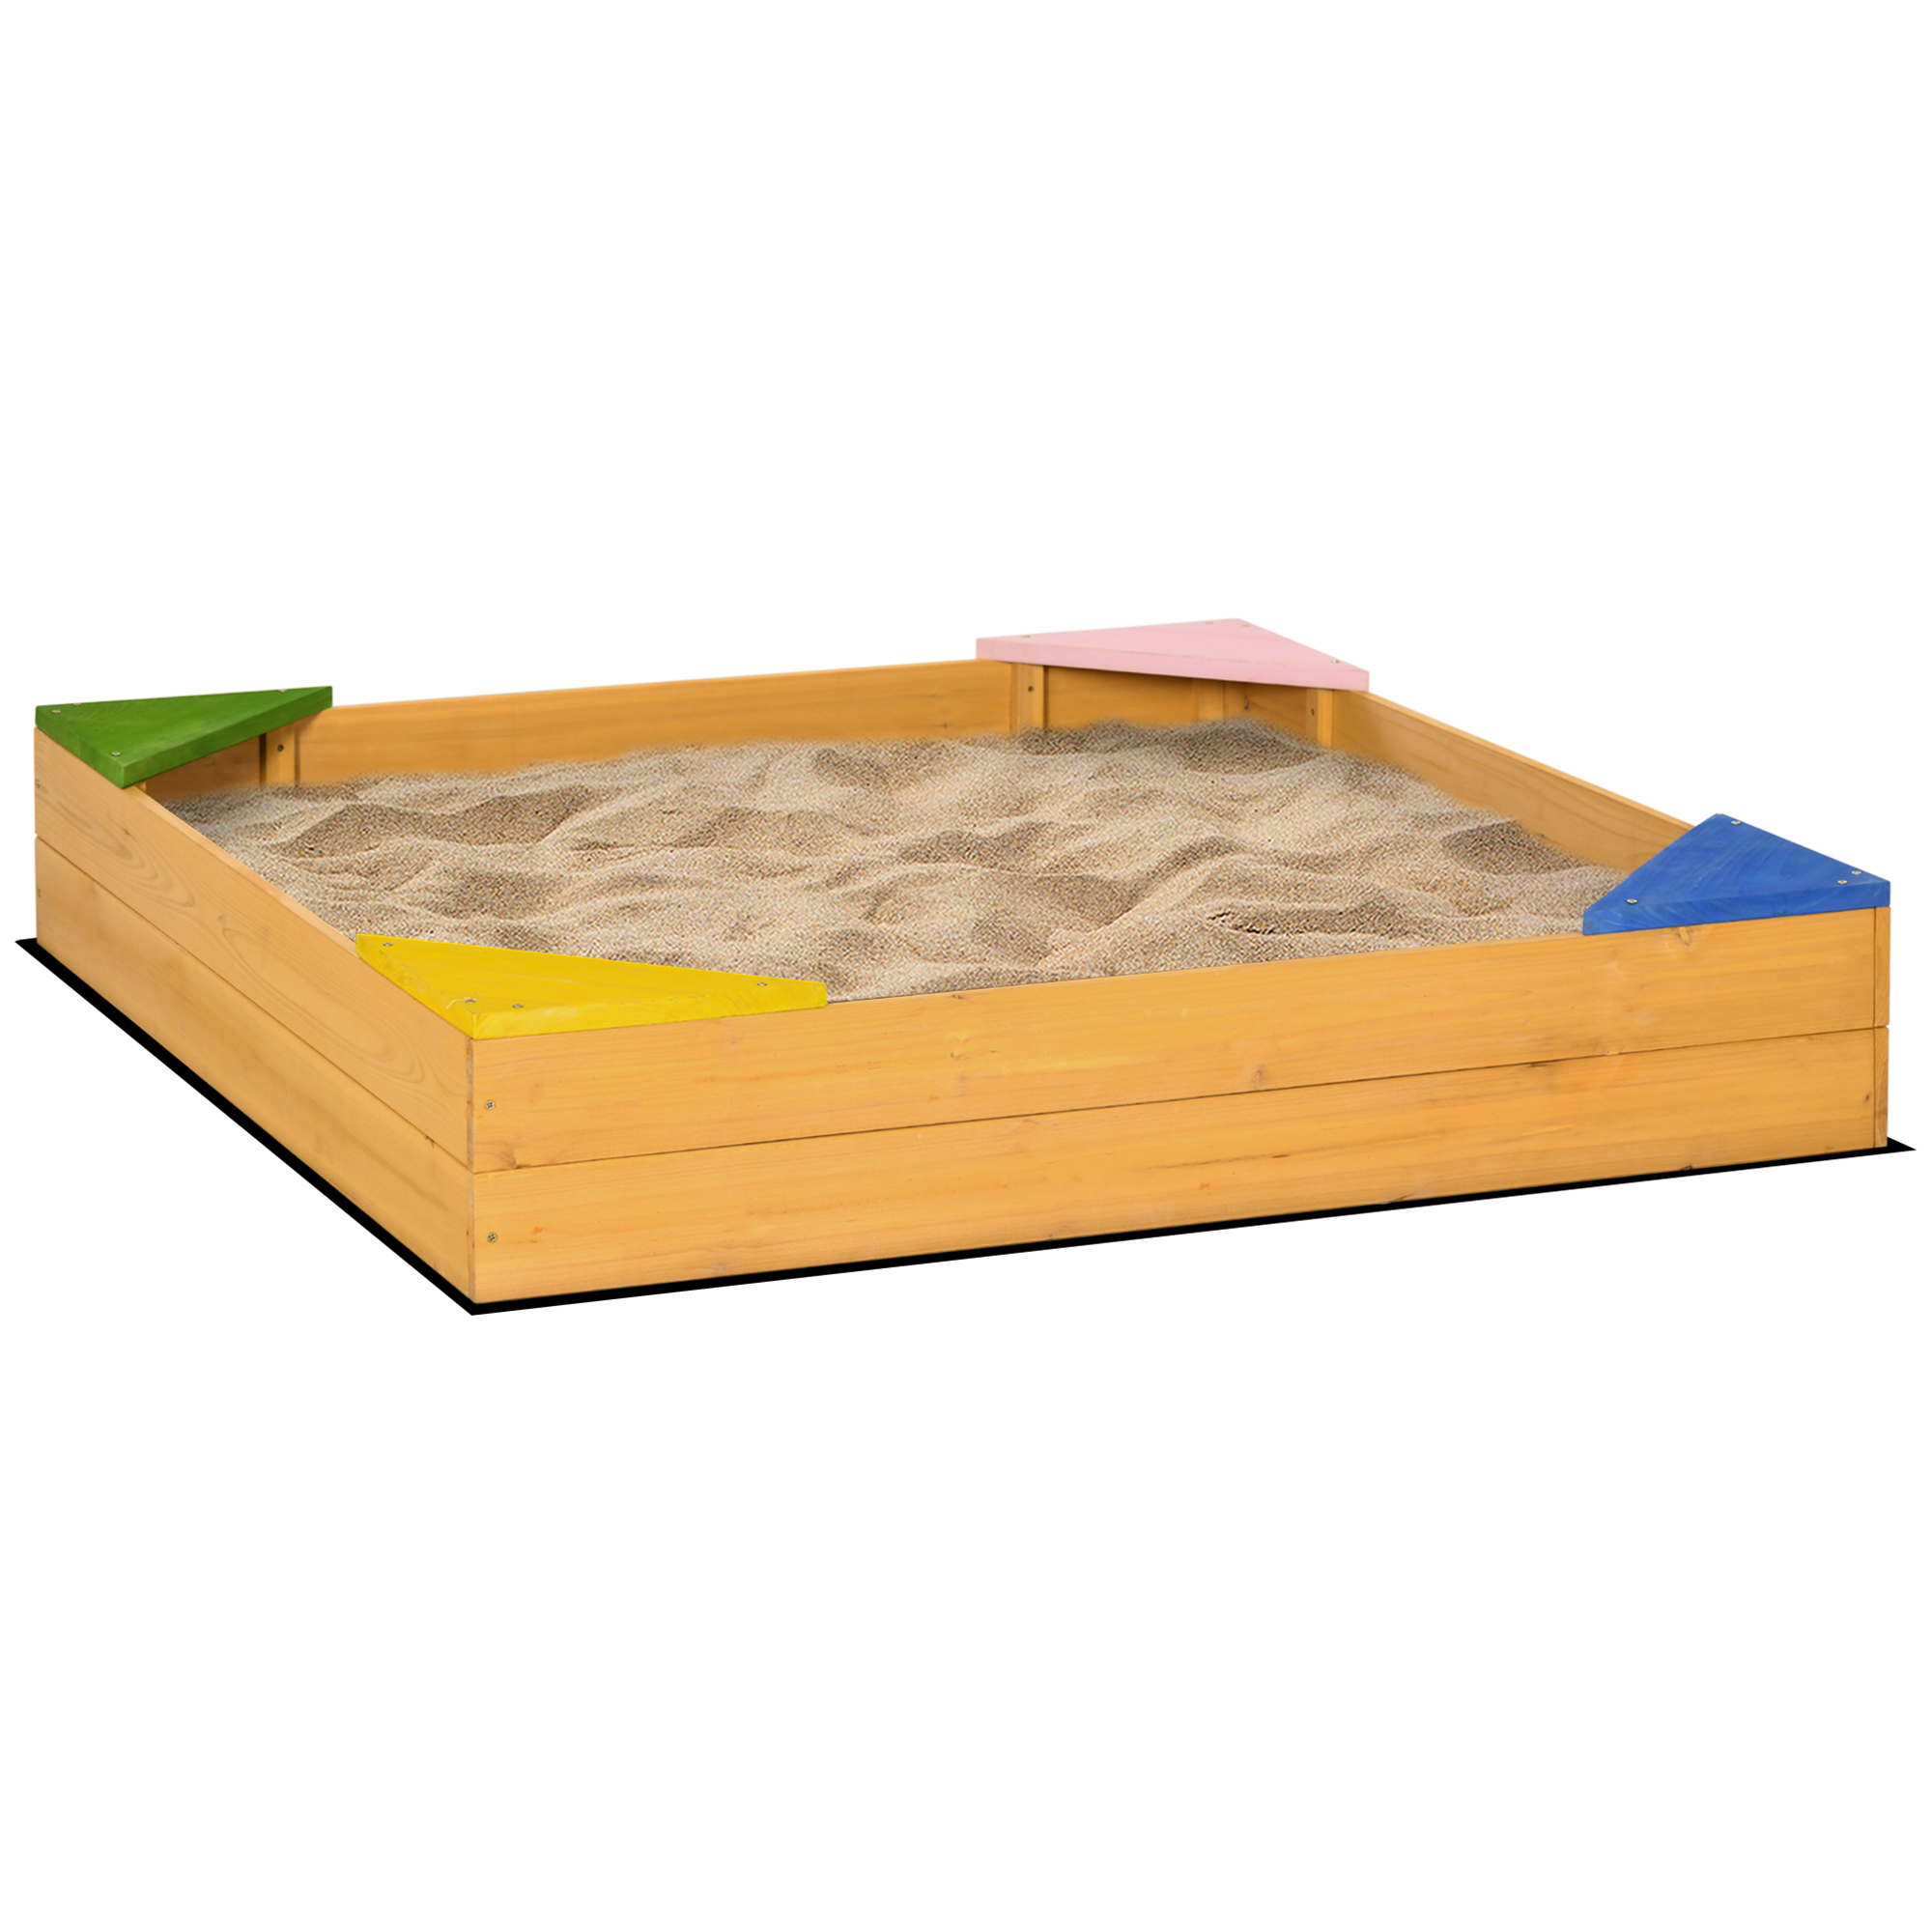 Outsunny Παιδικό Sandbox 4θέσιο Fir Wood με σχέδιο χωρίς πάτο